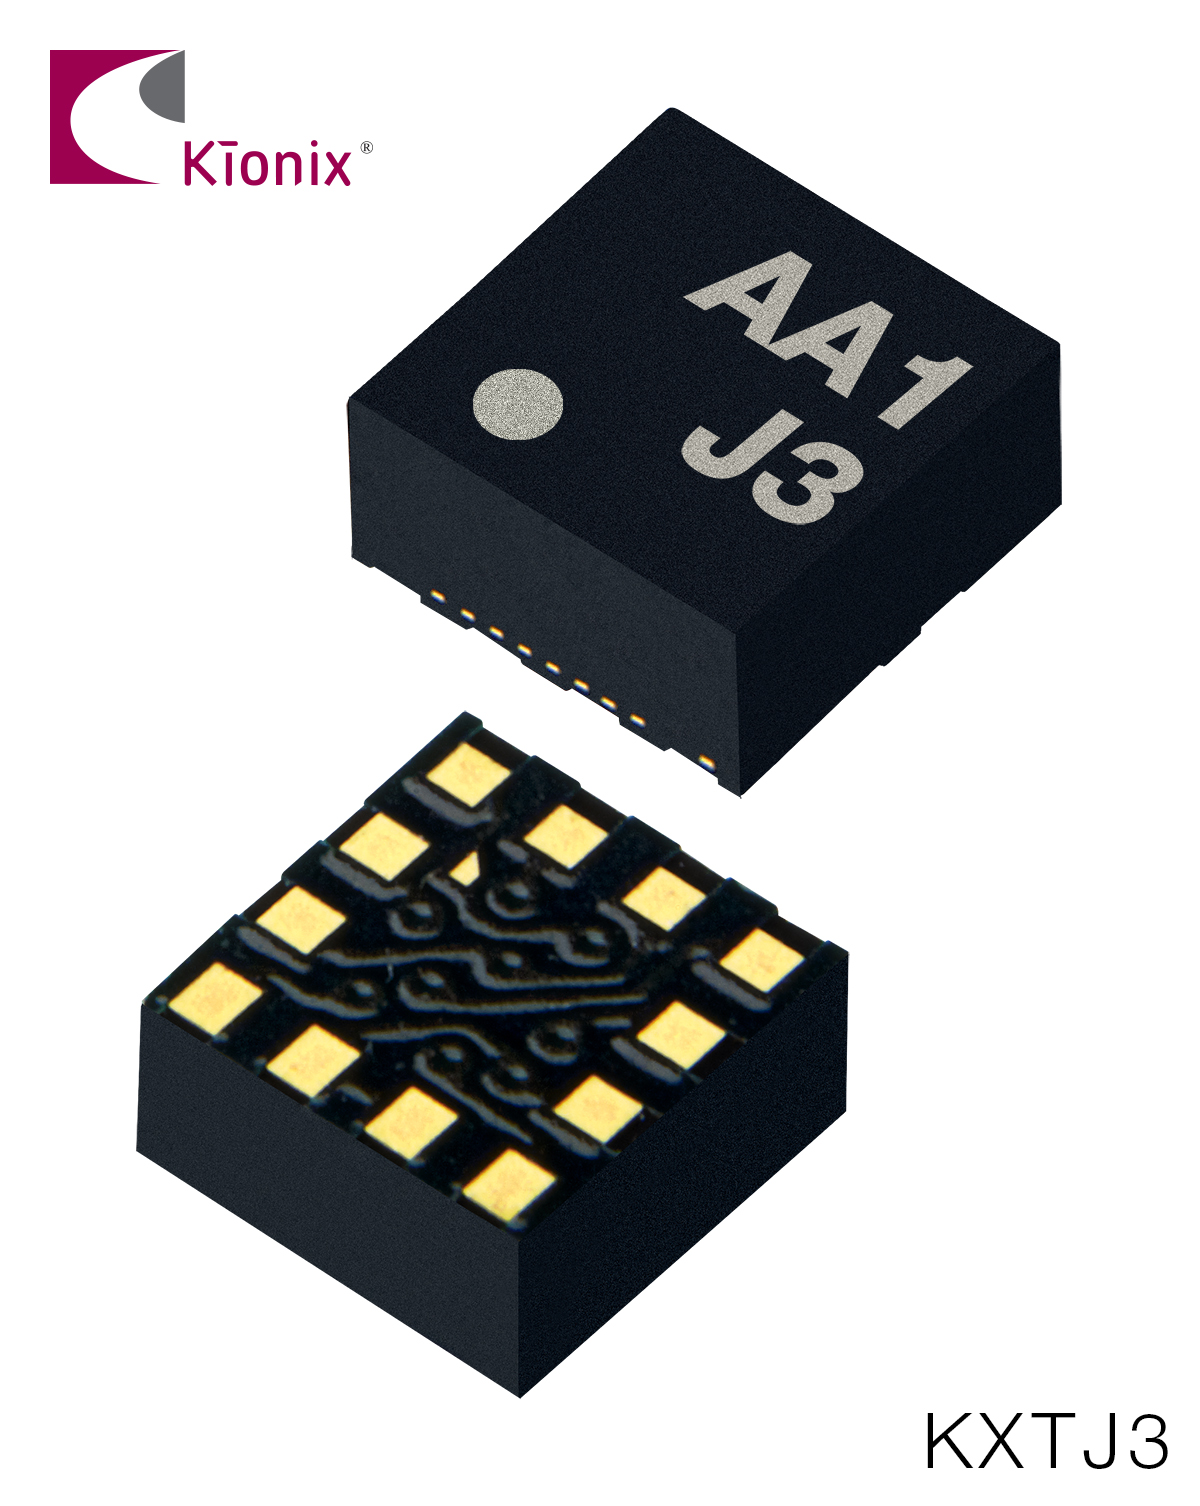  Kionix’s New KXTJ3 Accelerometer